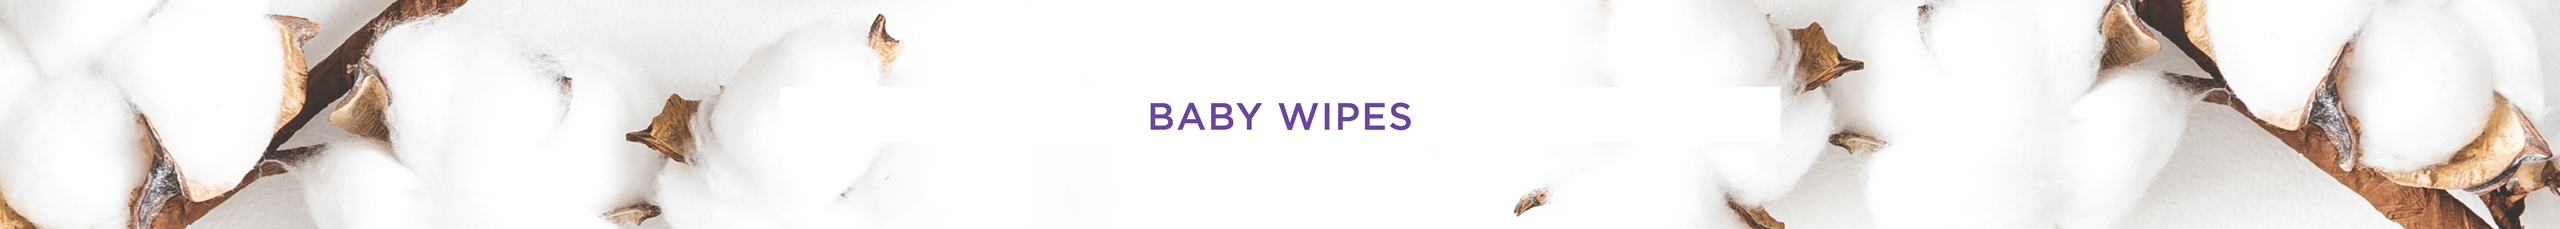 Swisspers Baby Wipes